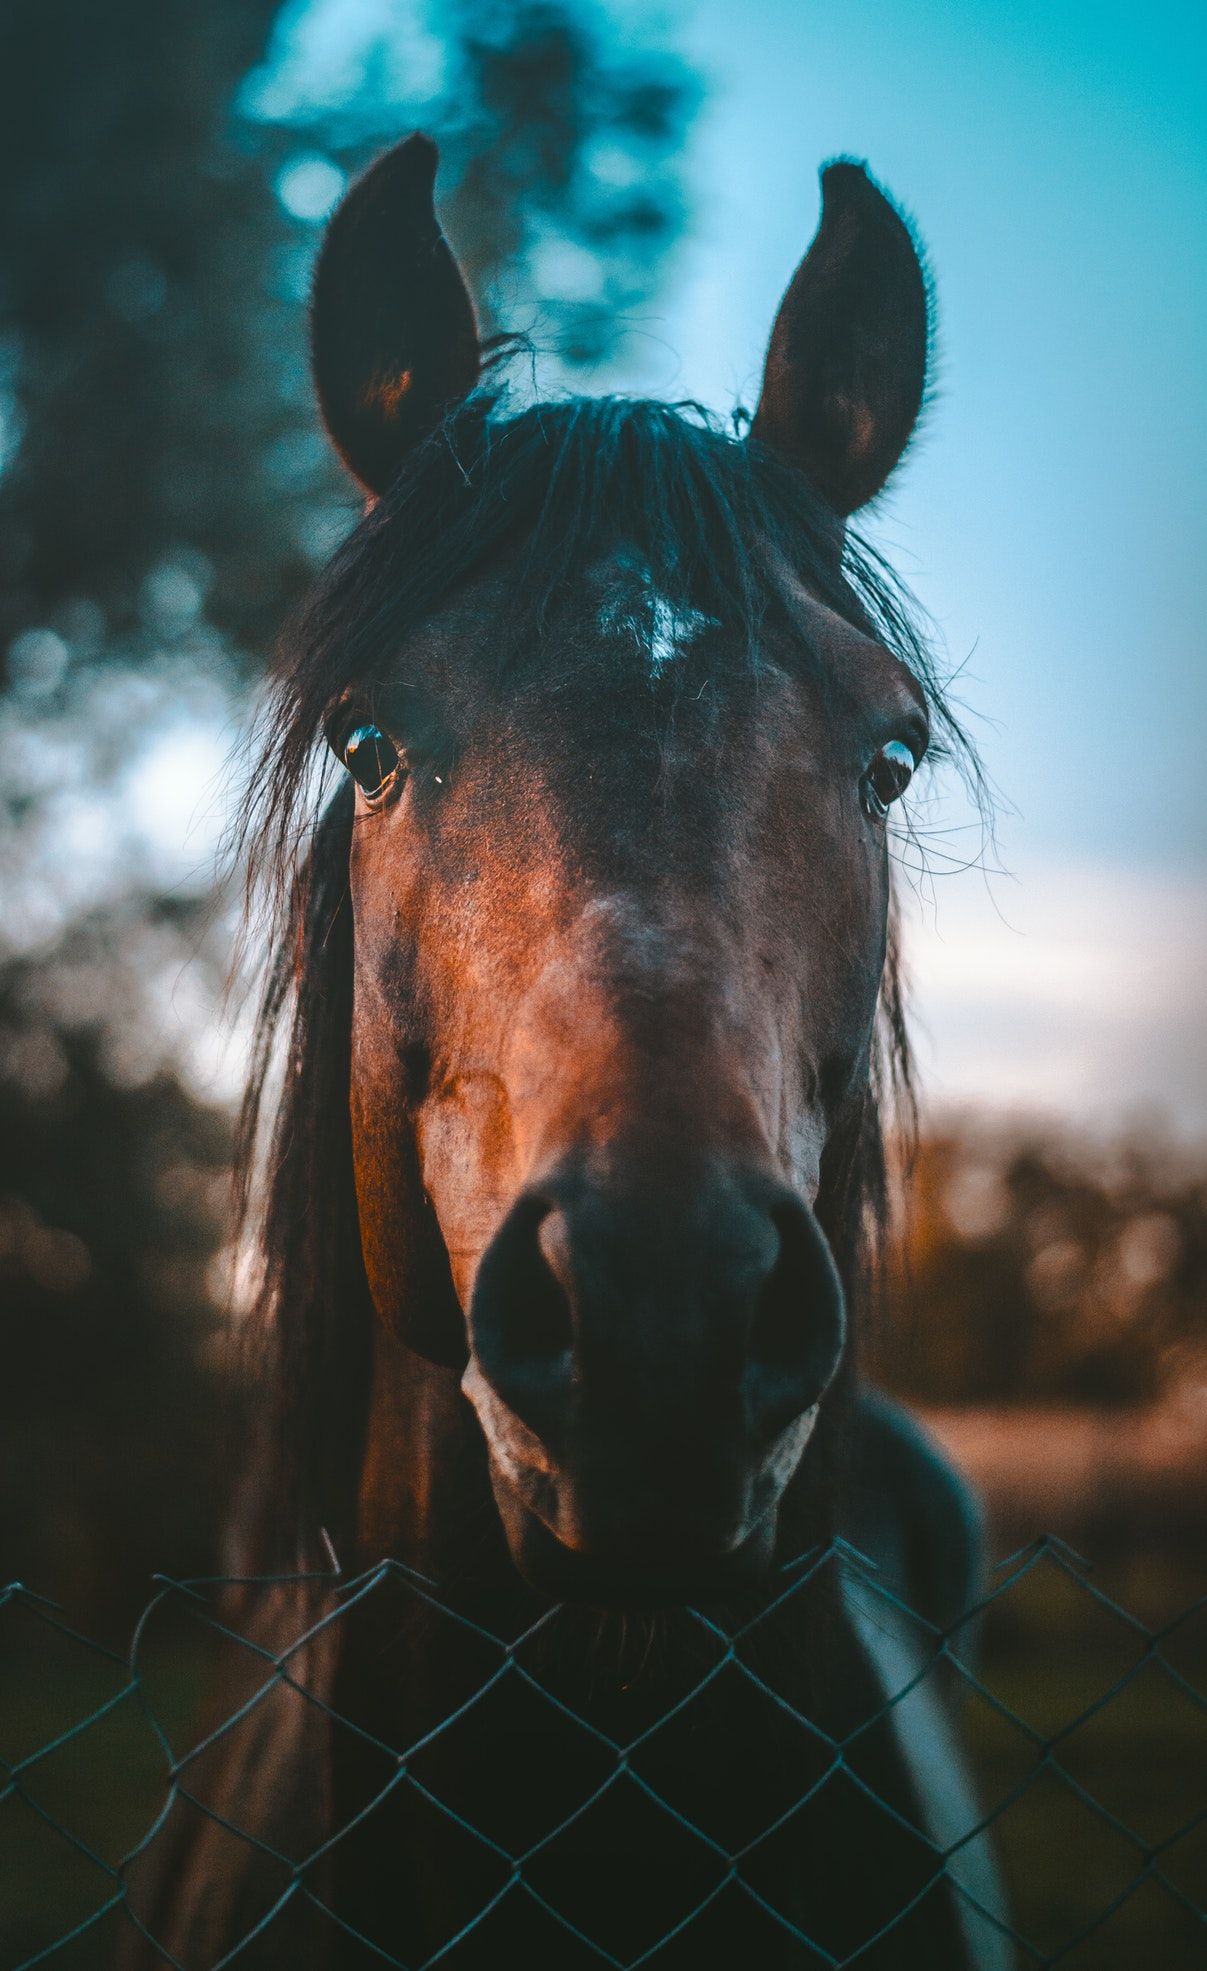 Horse, animal, eye and iphone wallpaper HD photo by Marko Blažević